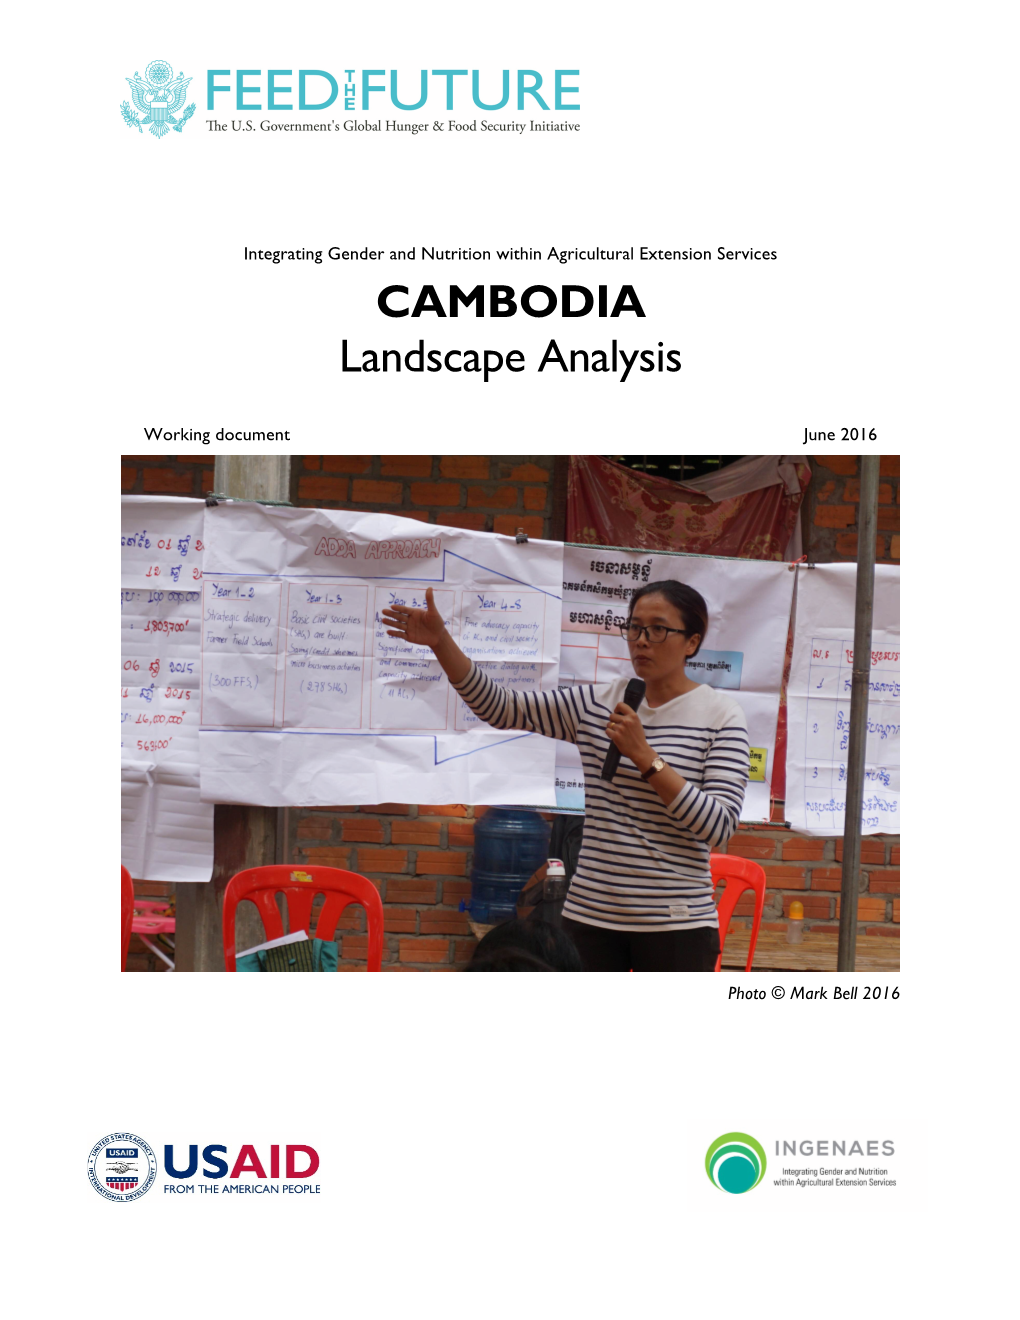 CAMBODIA Landscape Analysis